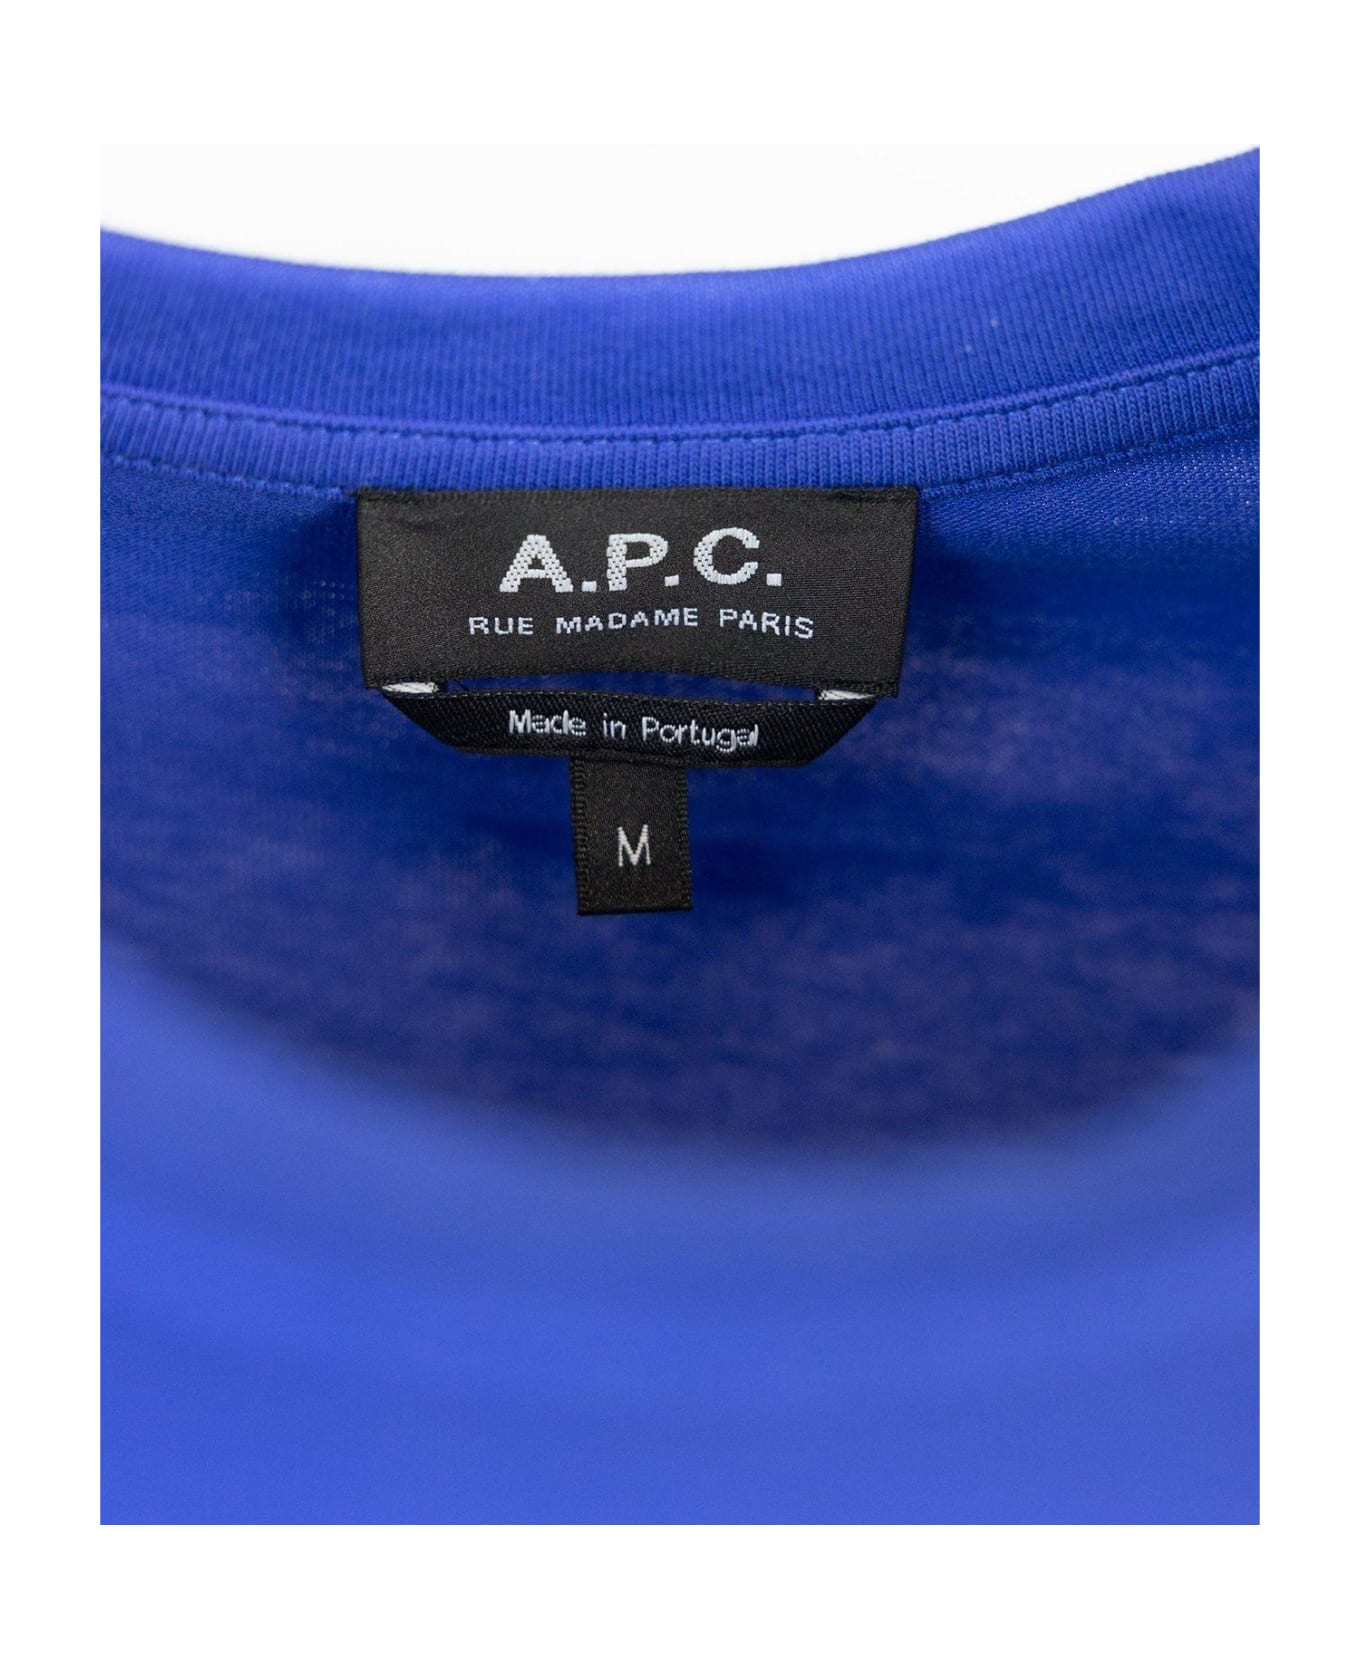 A.P.C. Logo Printed Crewneck T-shirt - Blue シャツ